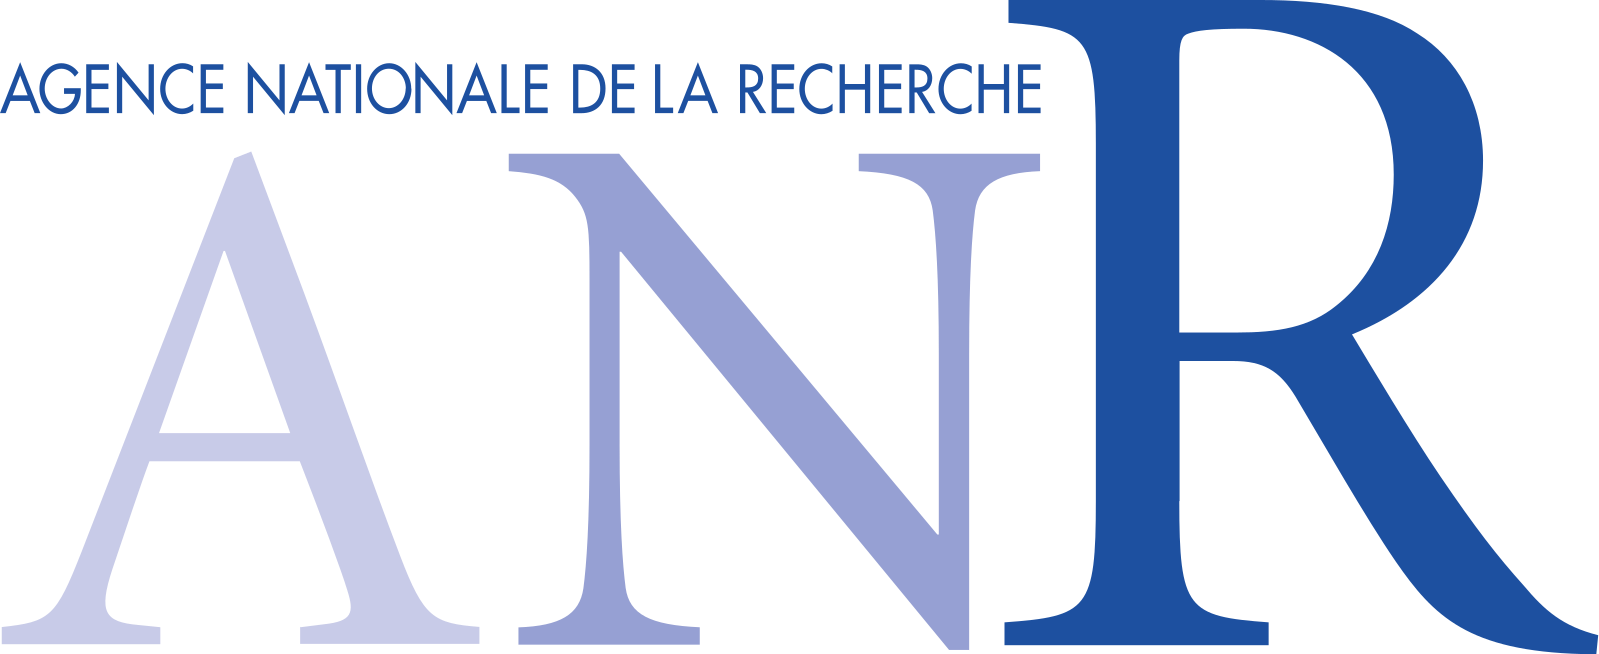 ANR_logo